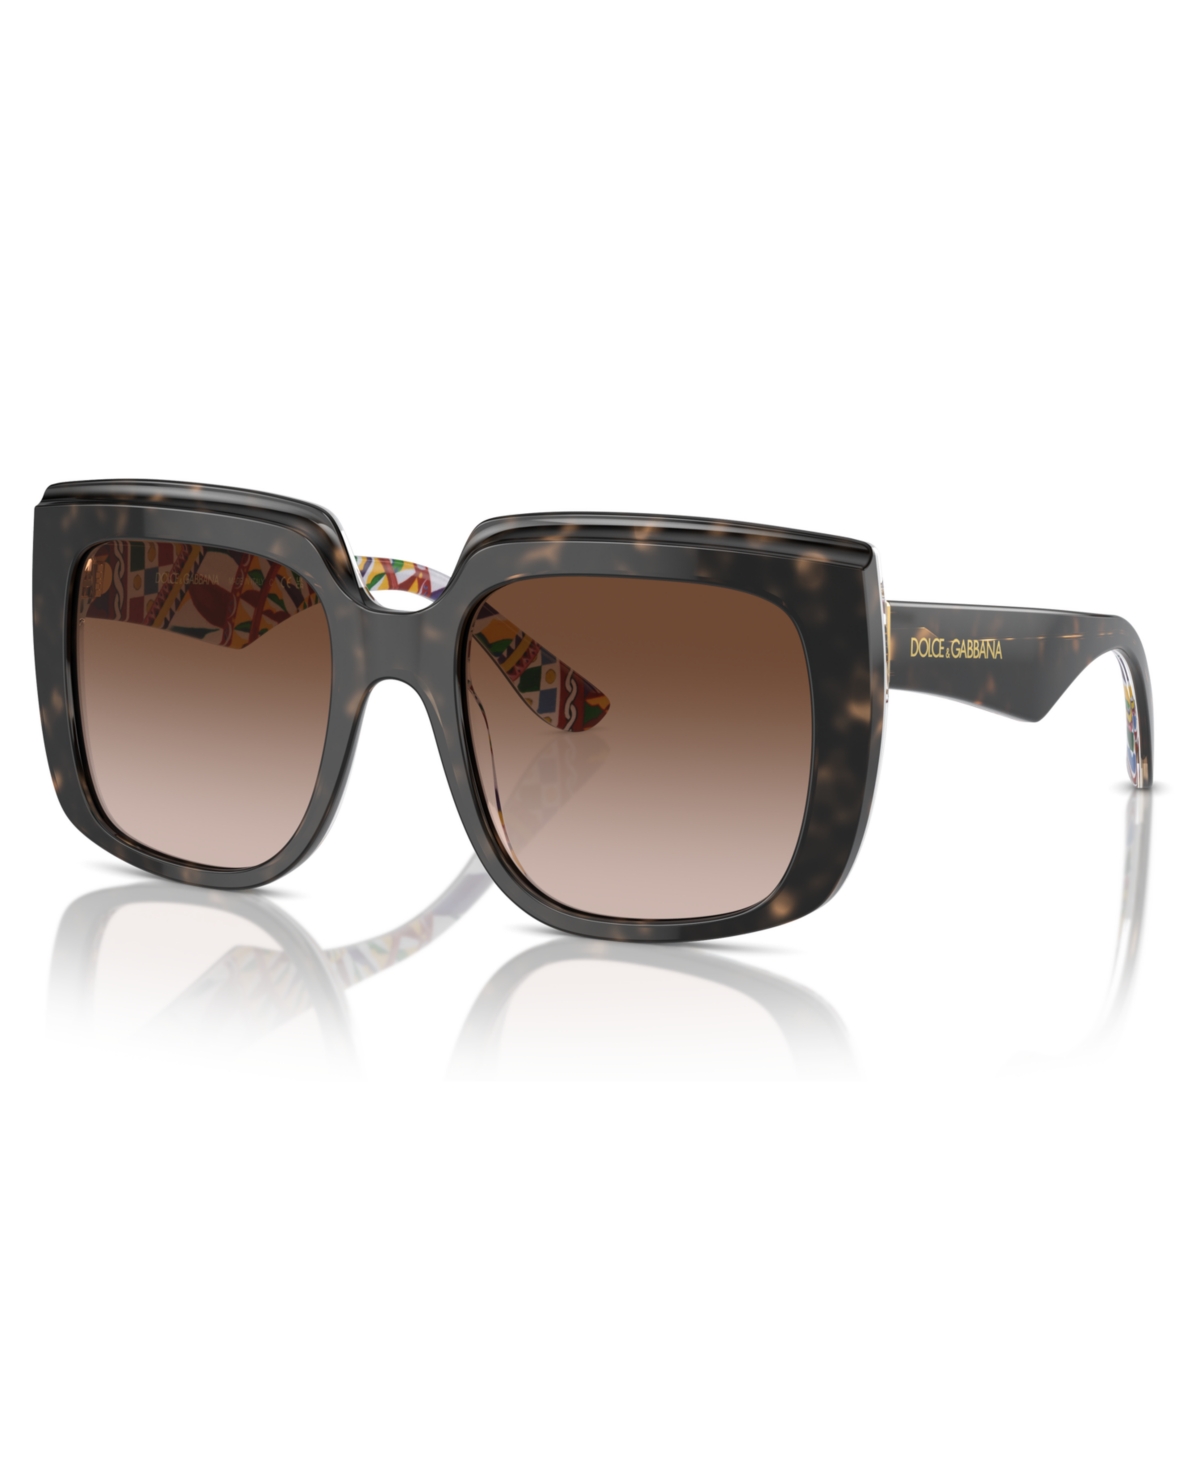 Dolce&Gabbana Women's Sunglasses, DG441454-y - Top Black on Zebra